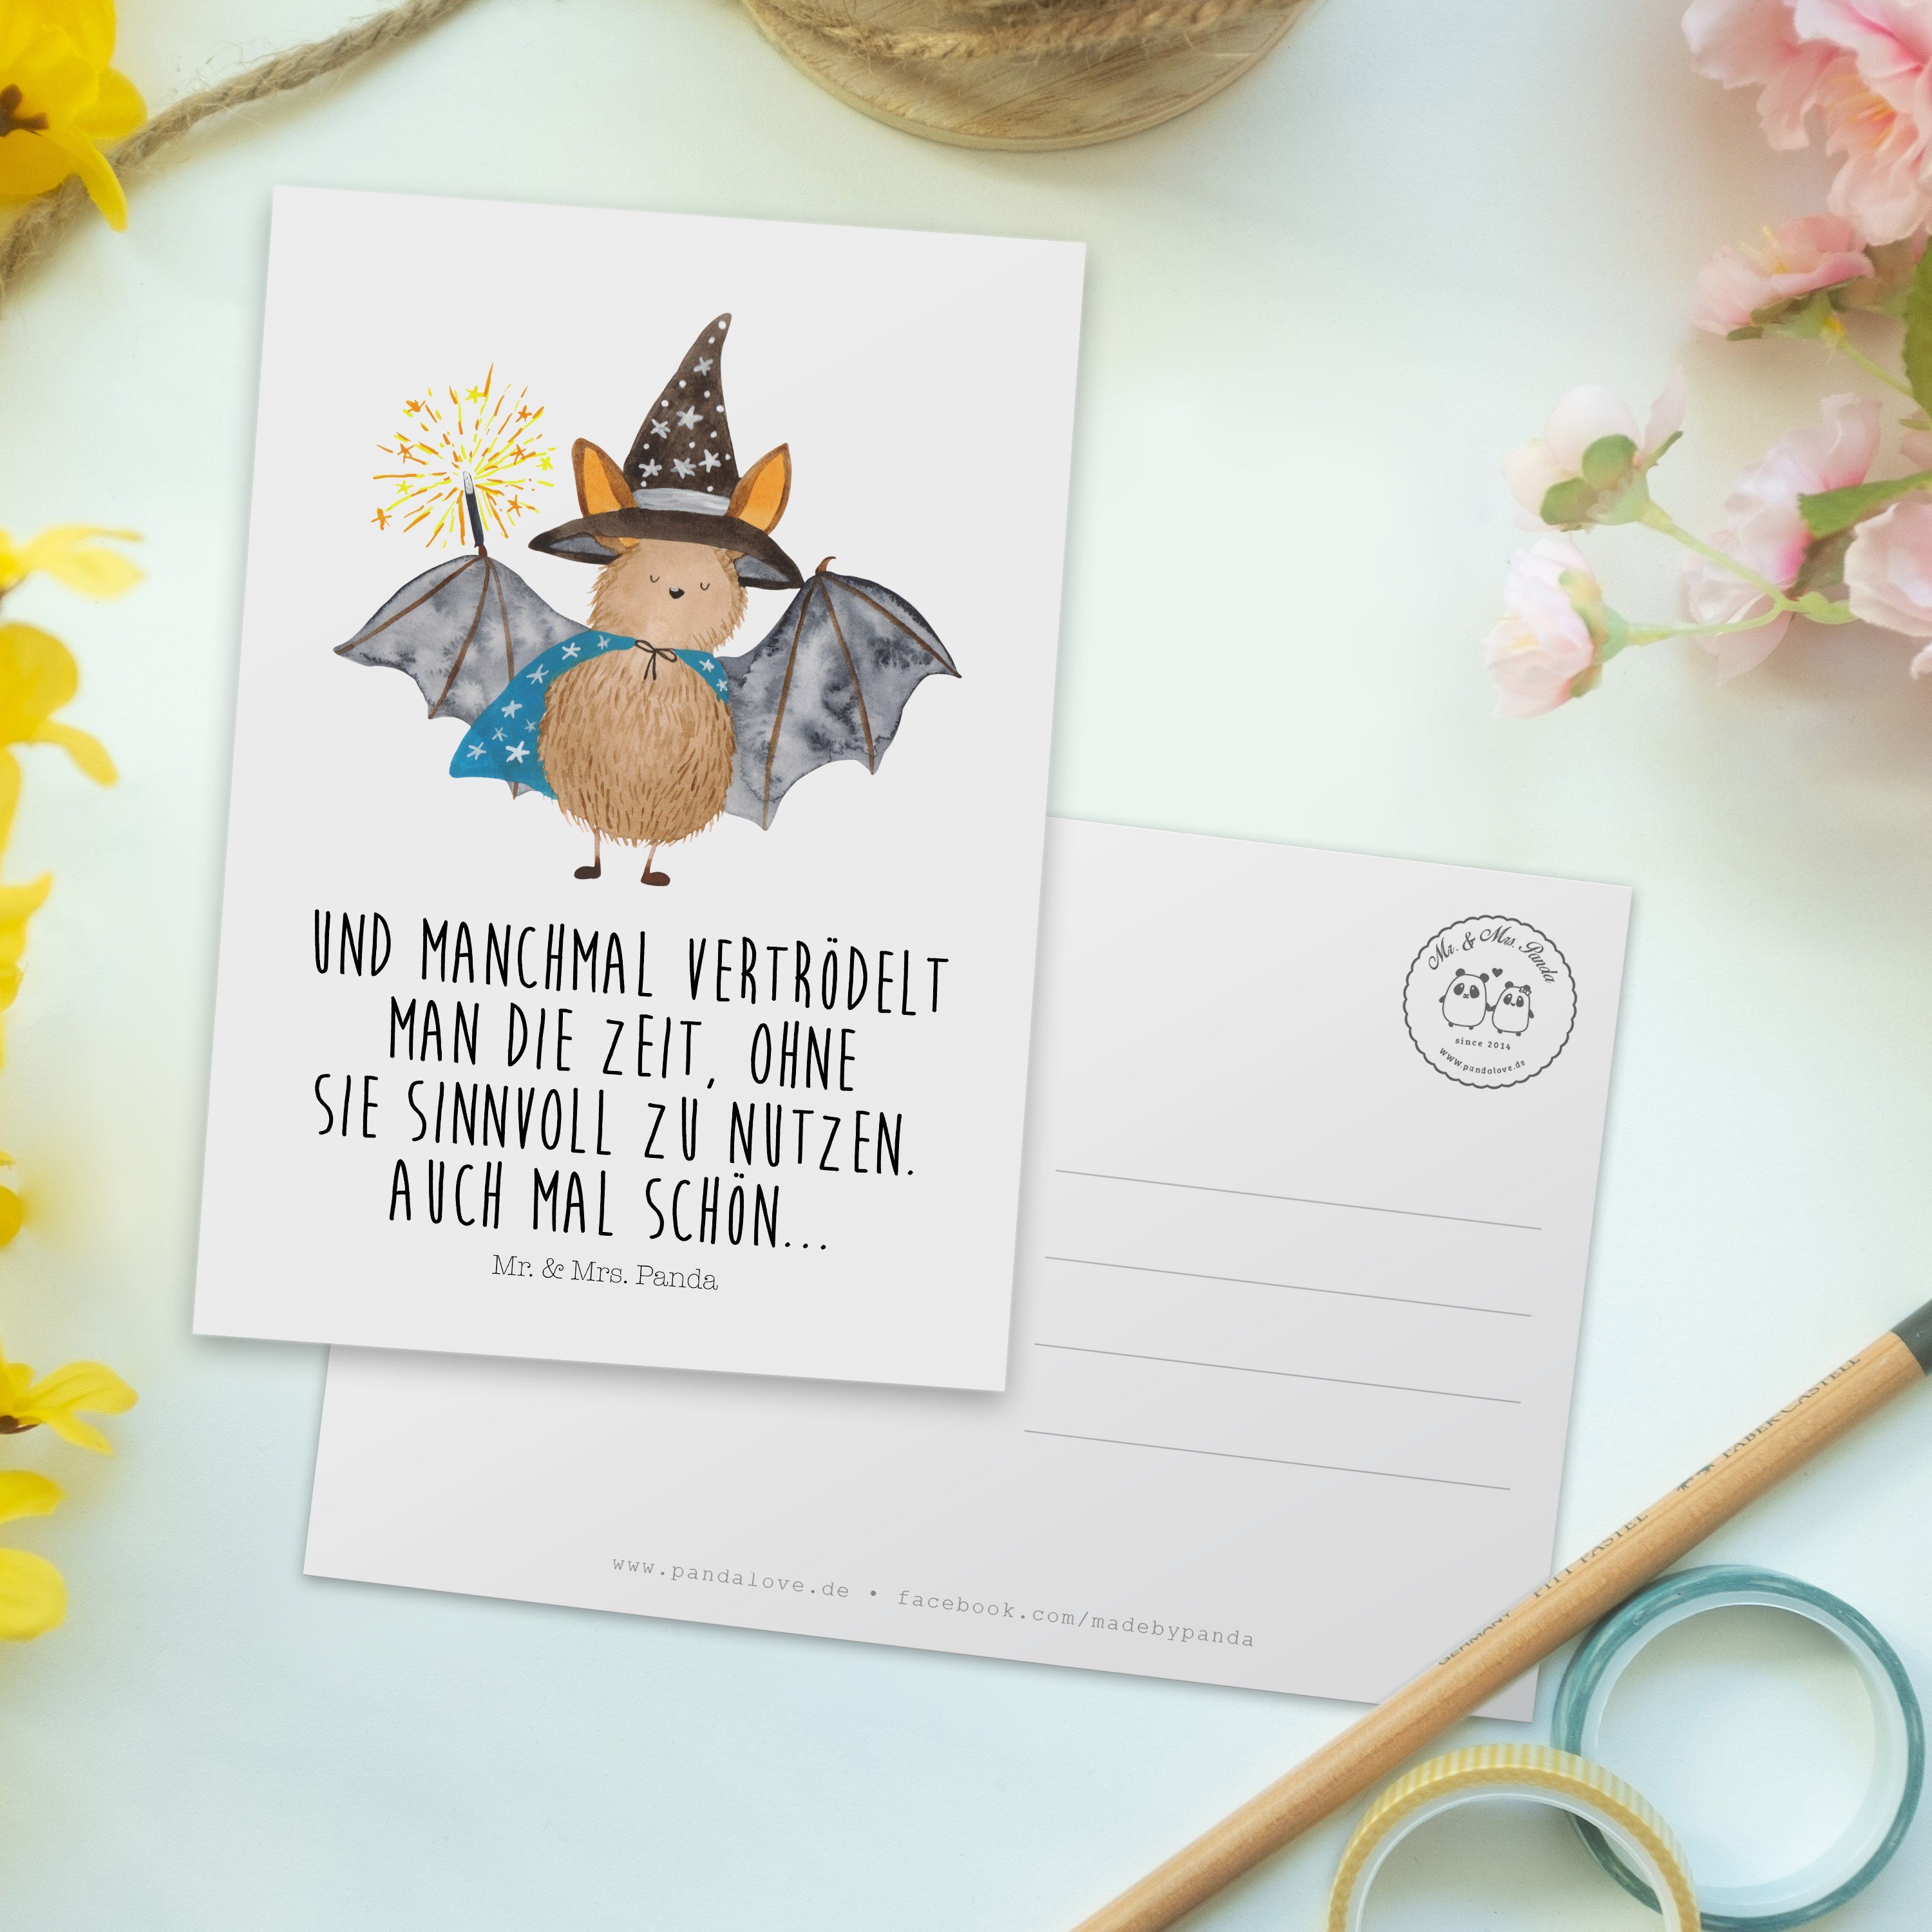 Mr. Geburtstagskarte, Geschenk, Postkarte - Zauberer & Panda - Weiß Fledermaus F Grußkarte, Mrs.